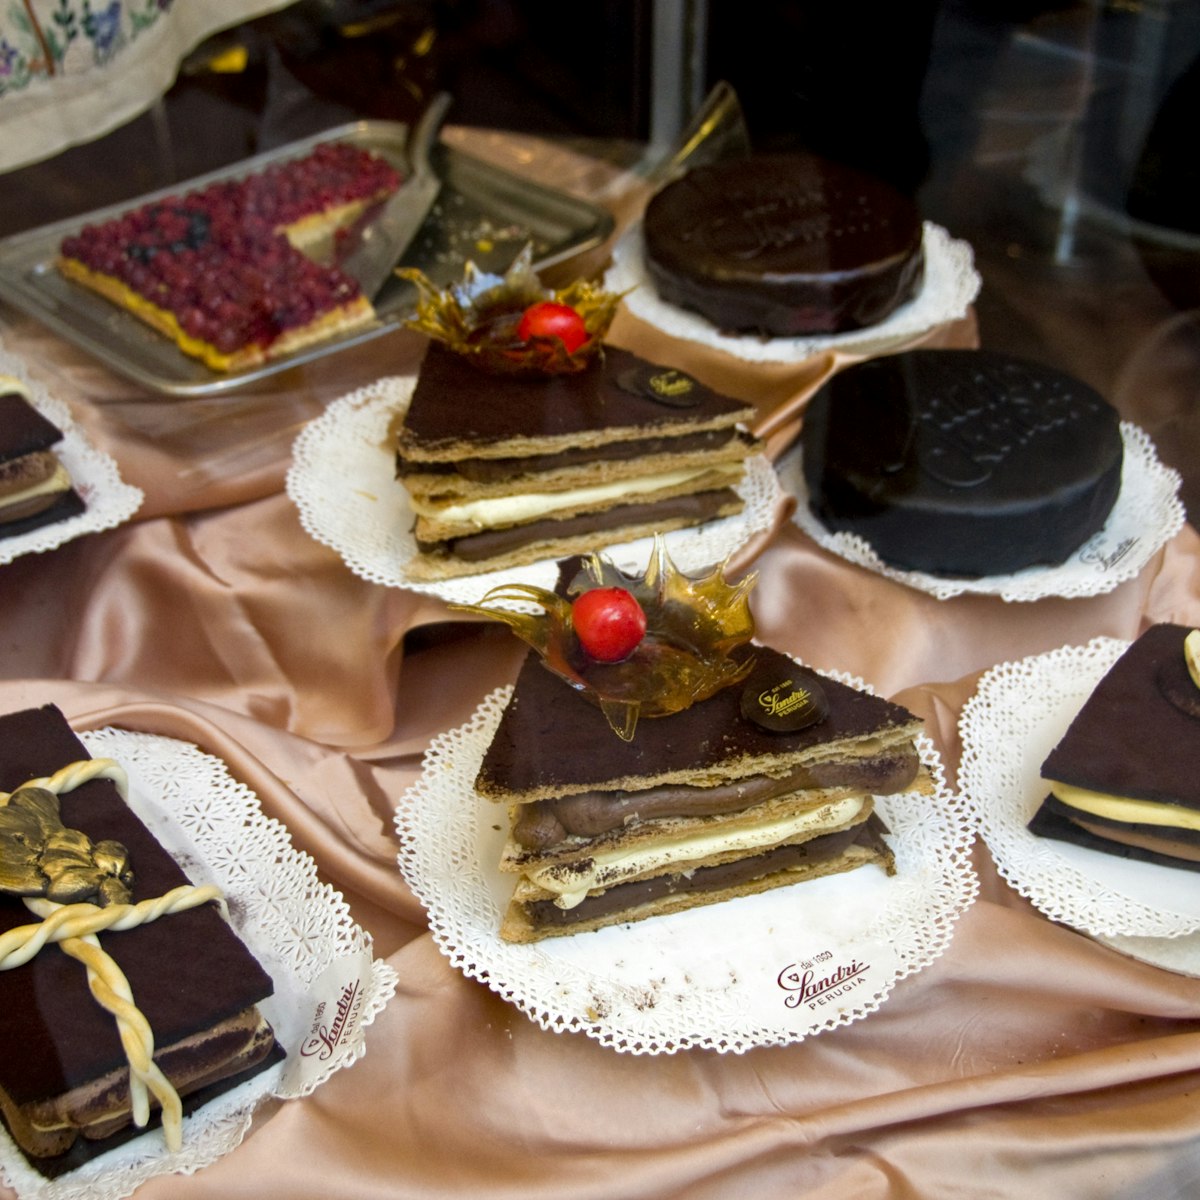 Special pastries at Sandri, Passeggiata, Corso Vannucci.